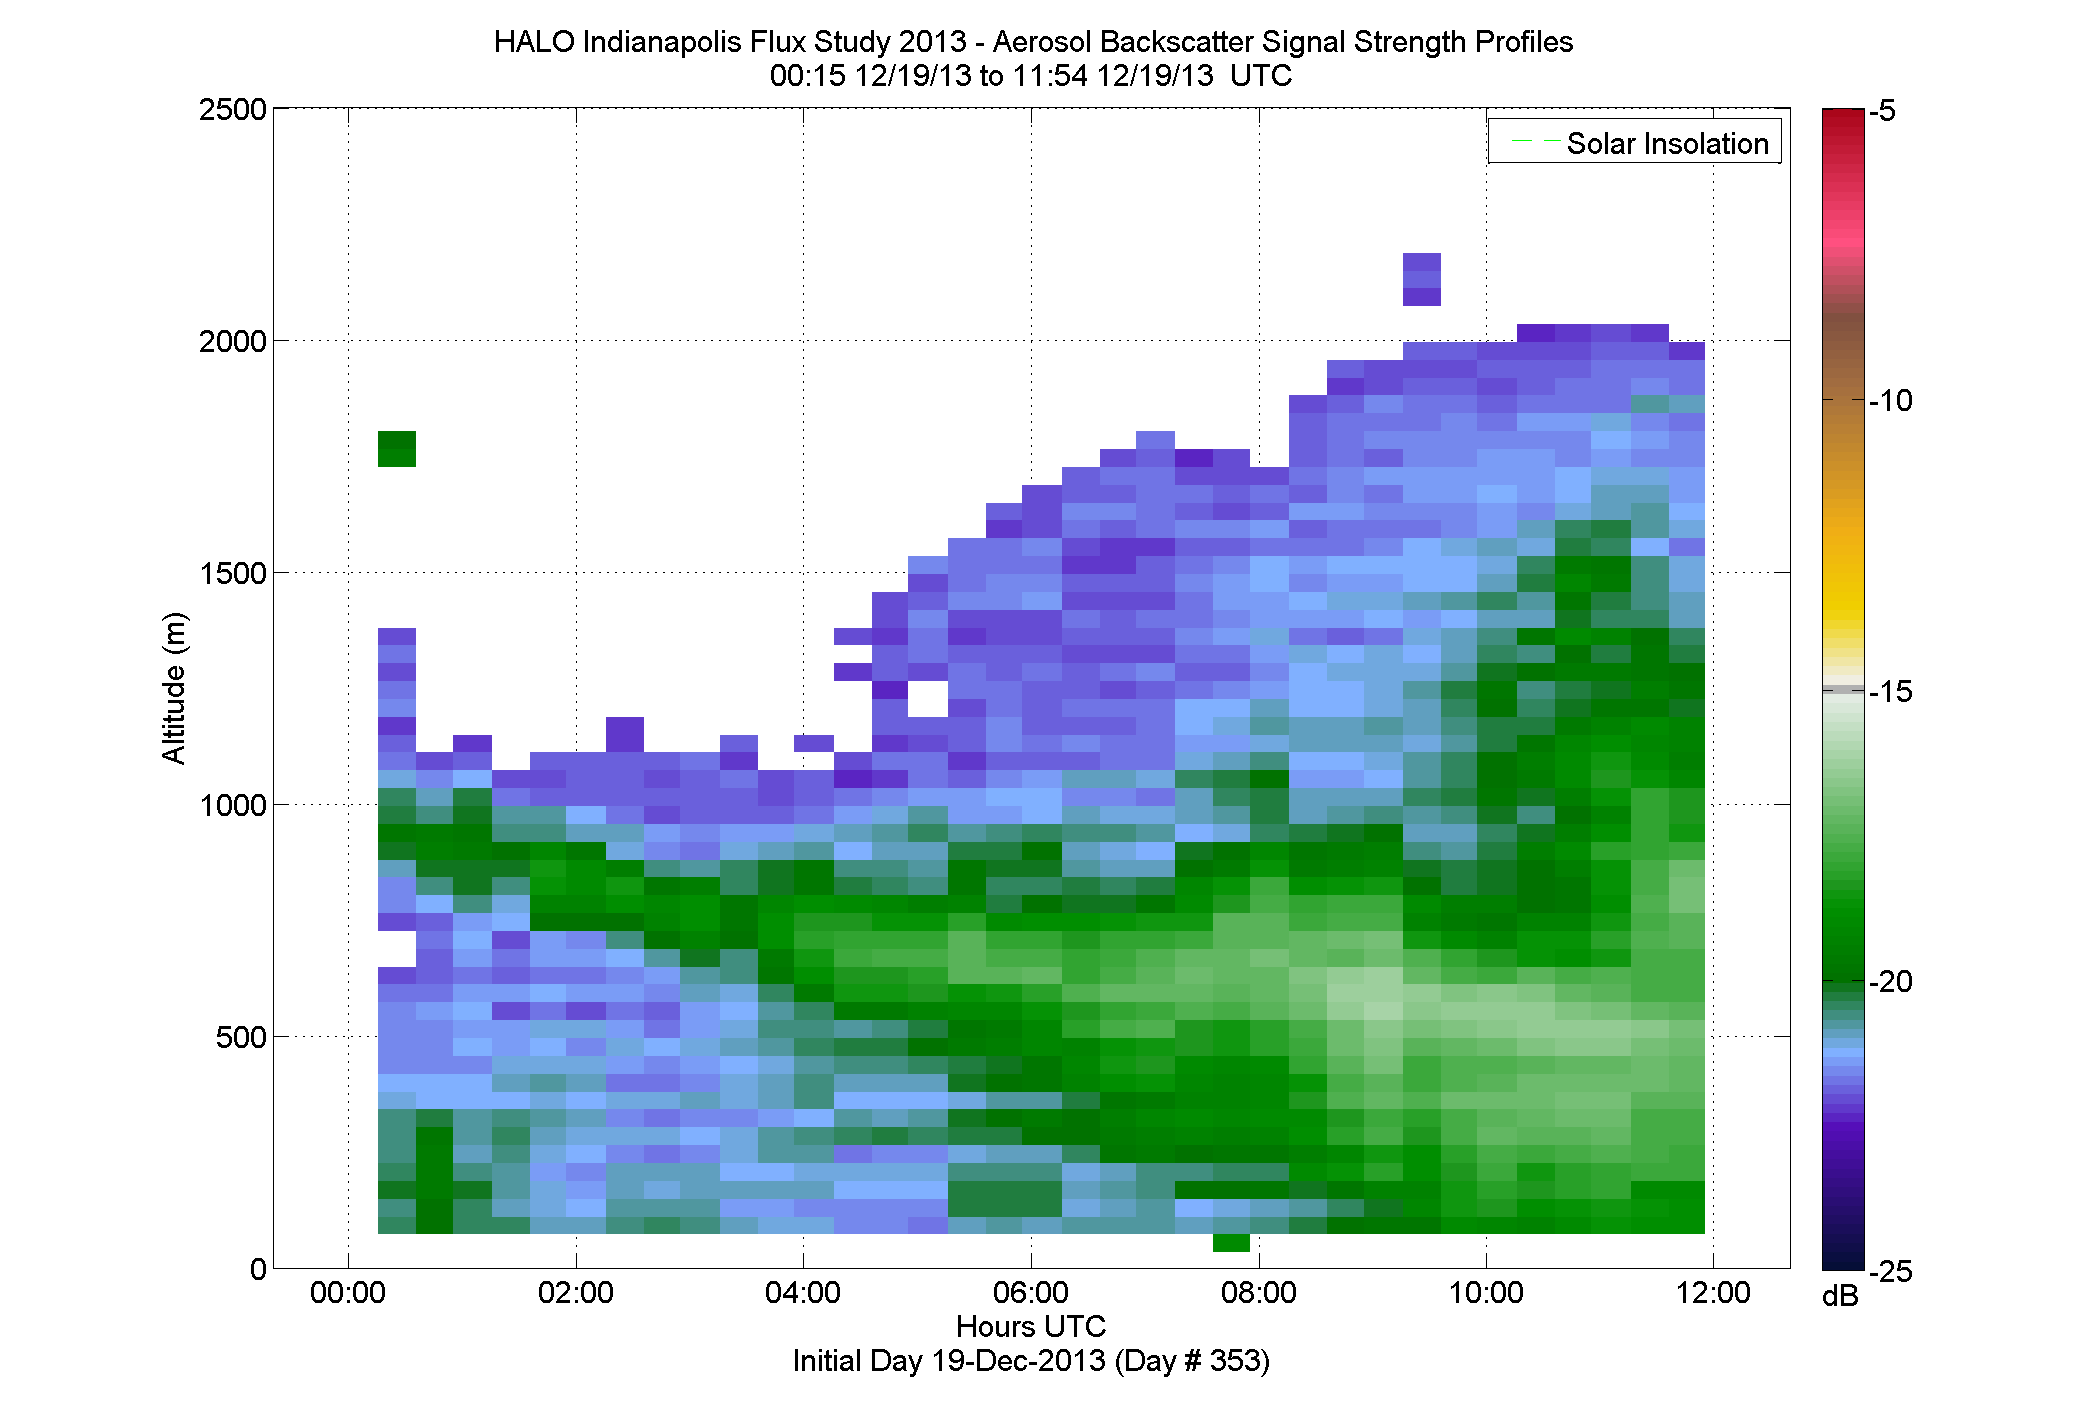 HALO aerosol backscatter signal strength profile - December 19 am